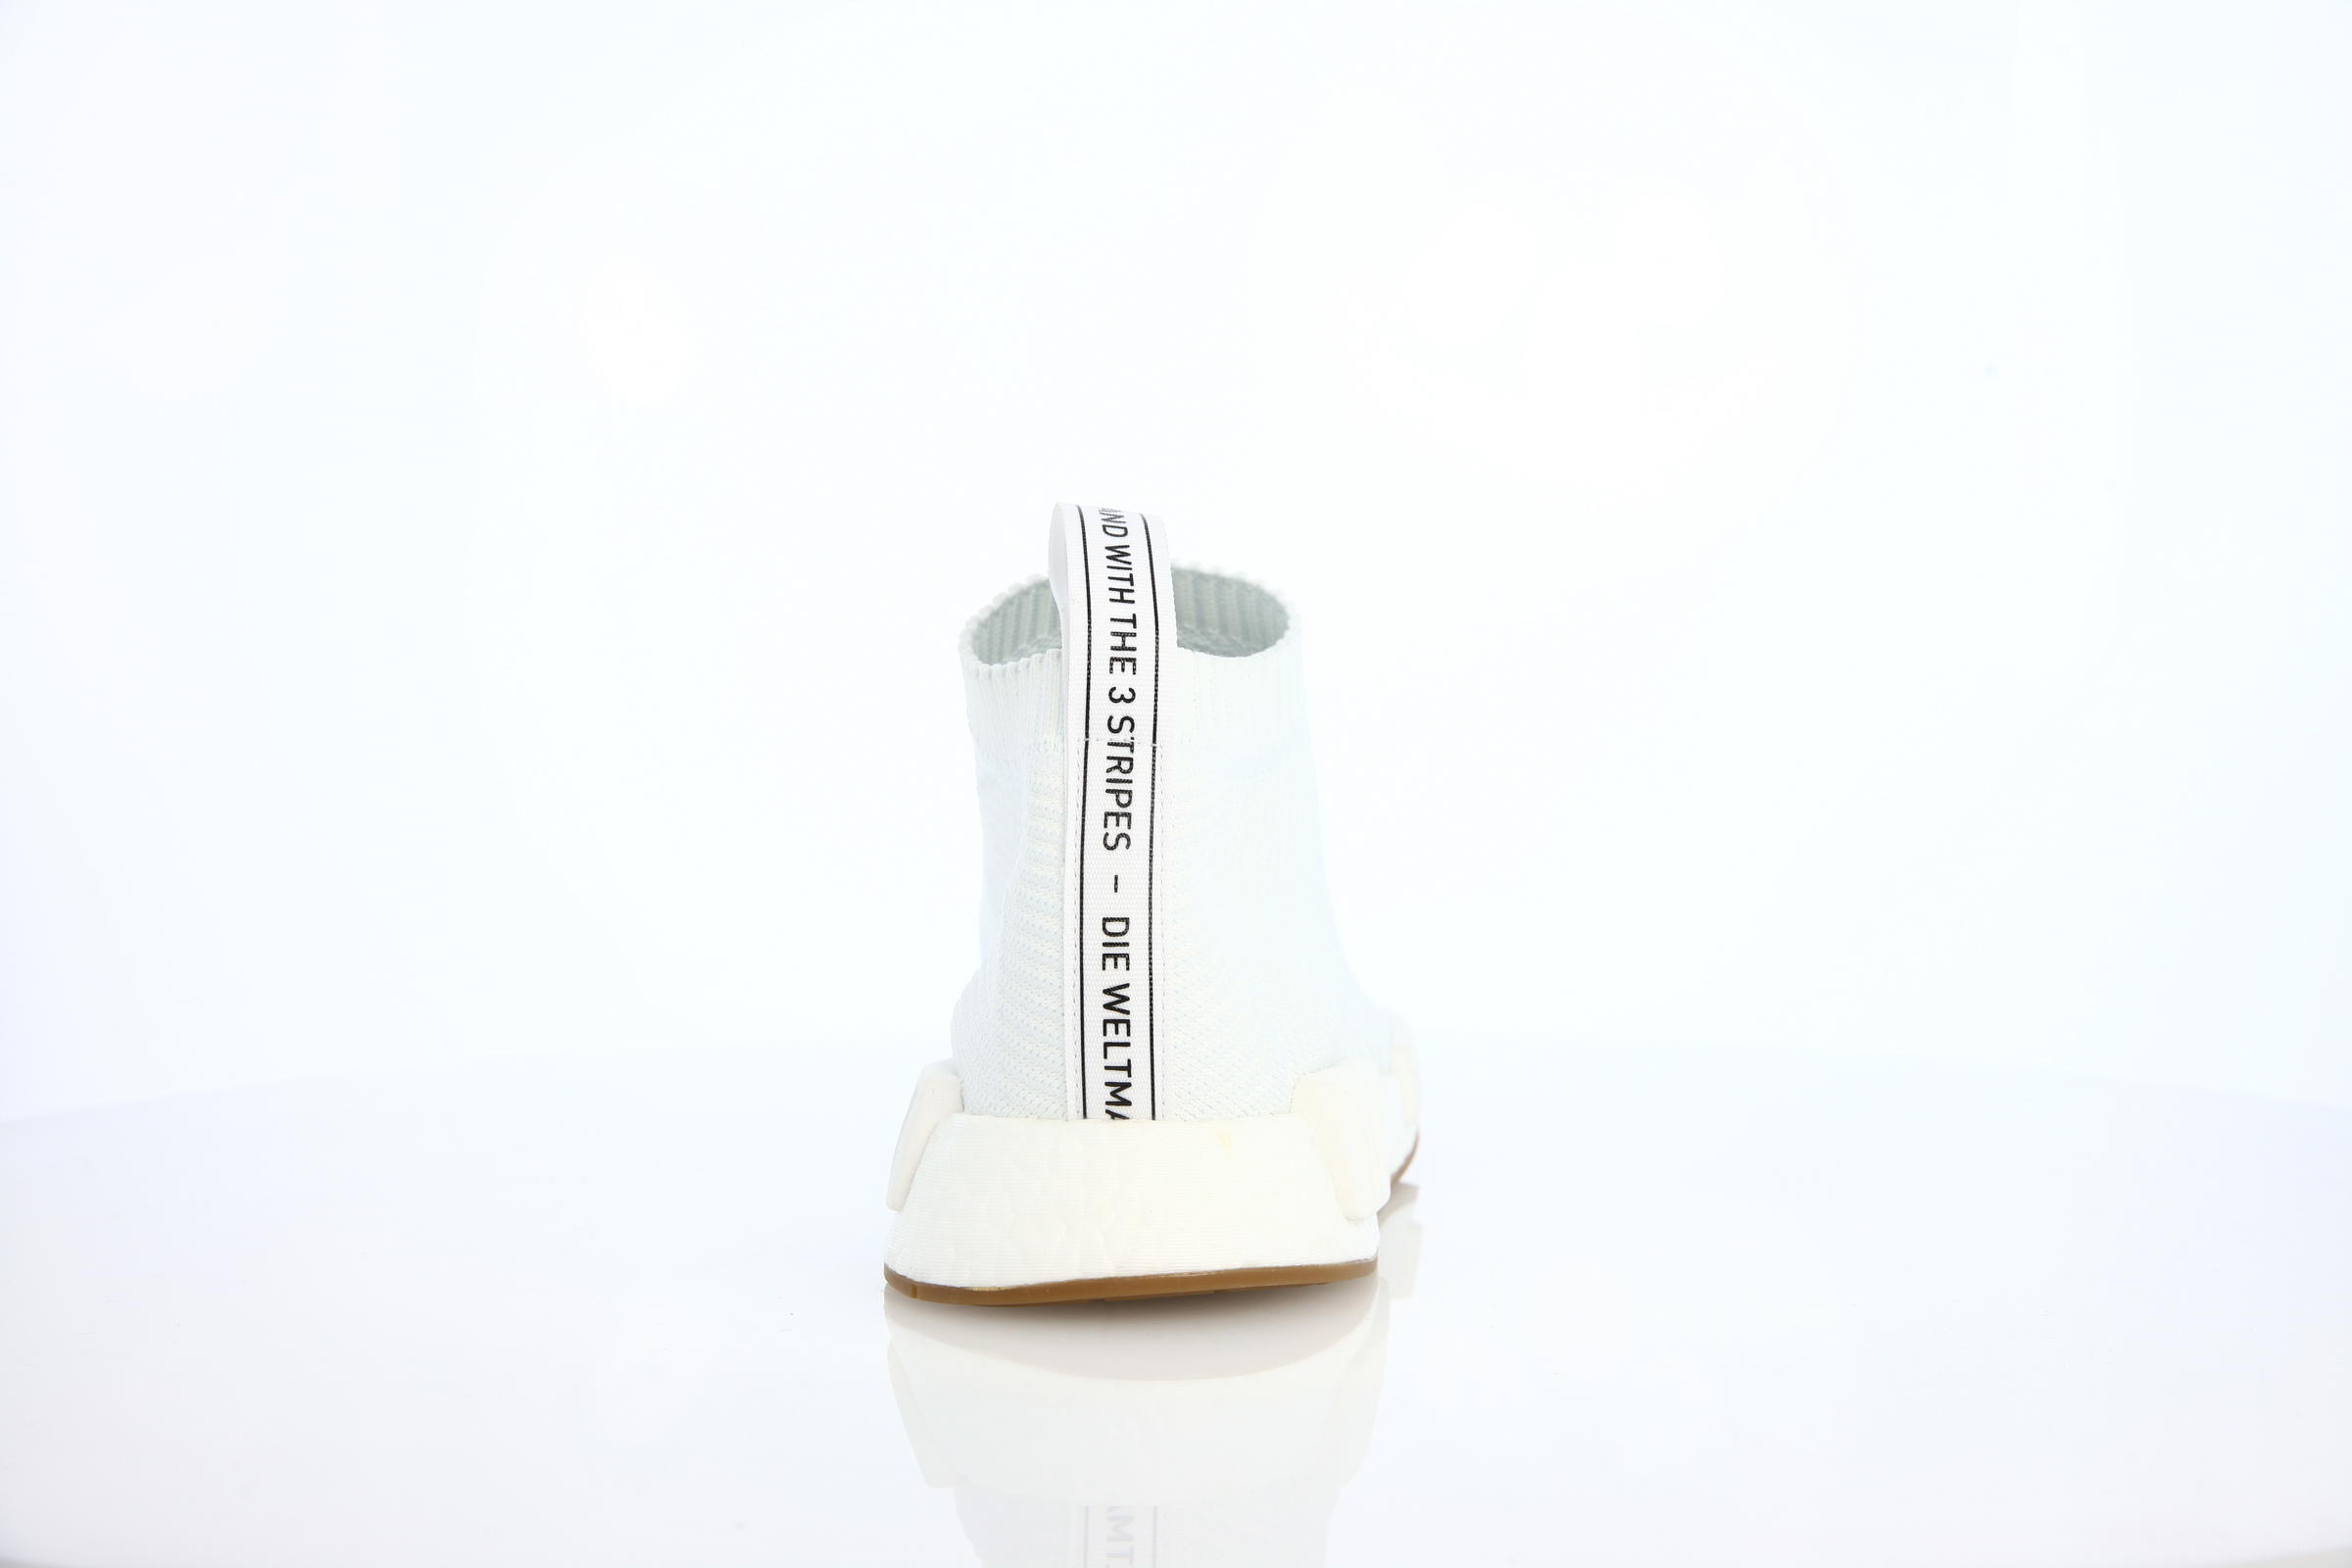 adidas Originals Nmd cs1 City Sock Boost Primeknit "White Gum"